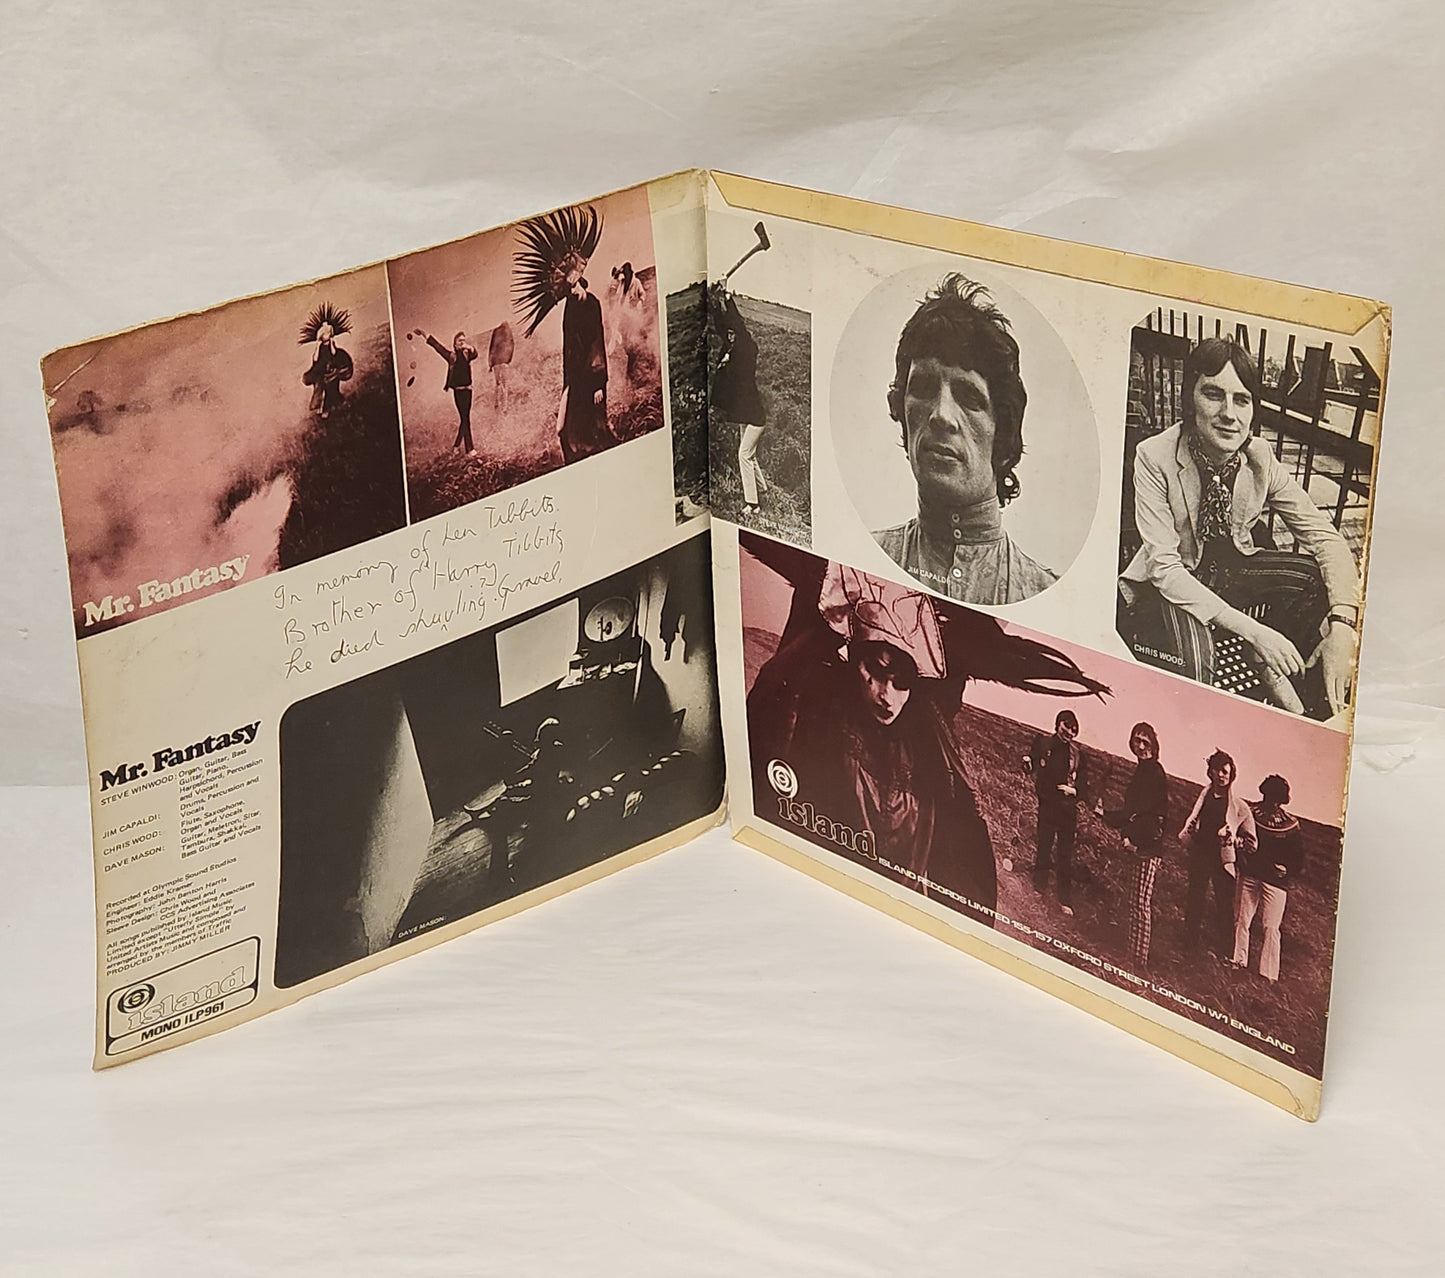 Traffic "Mr. Fantasy" 1967 Psychedelic Rock Record Album (UK)